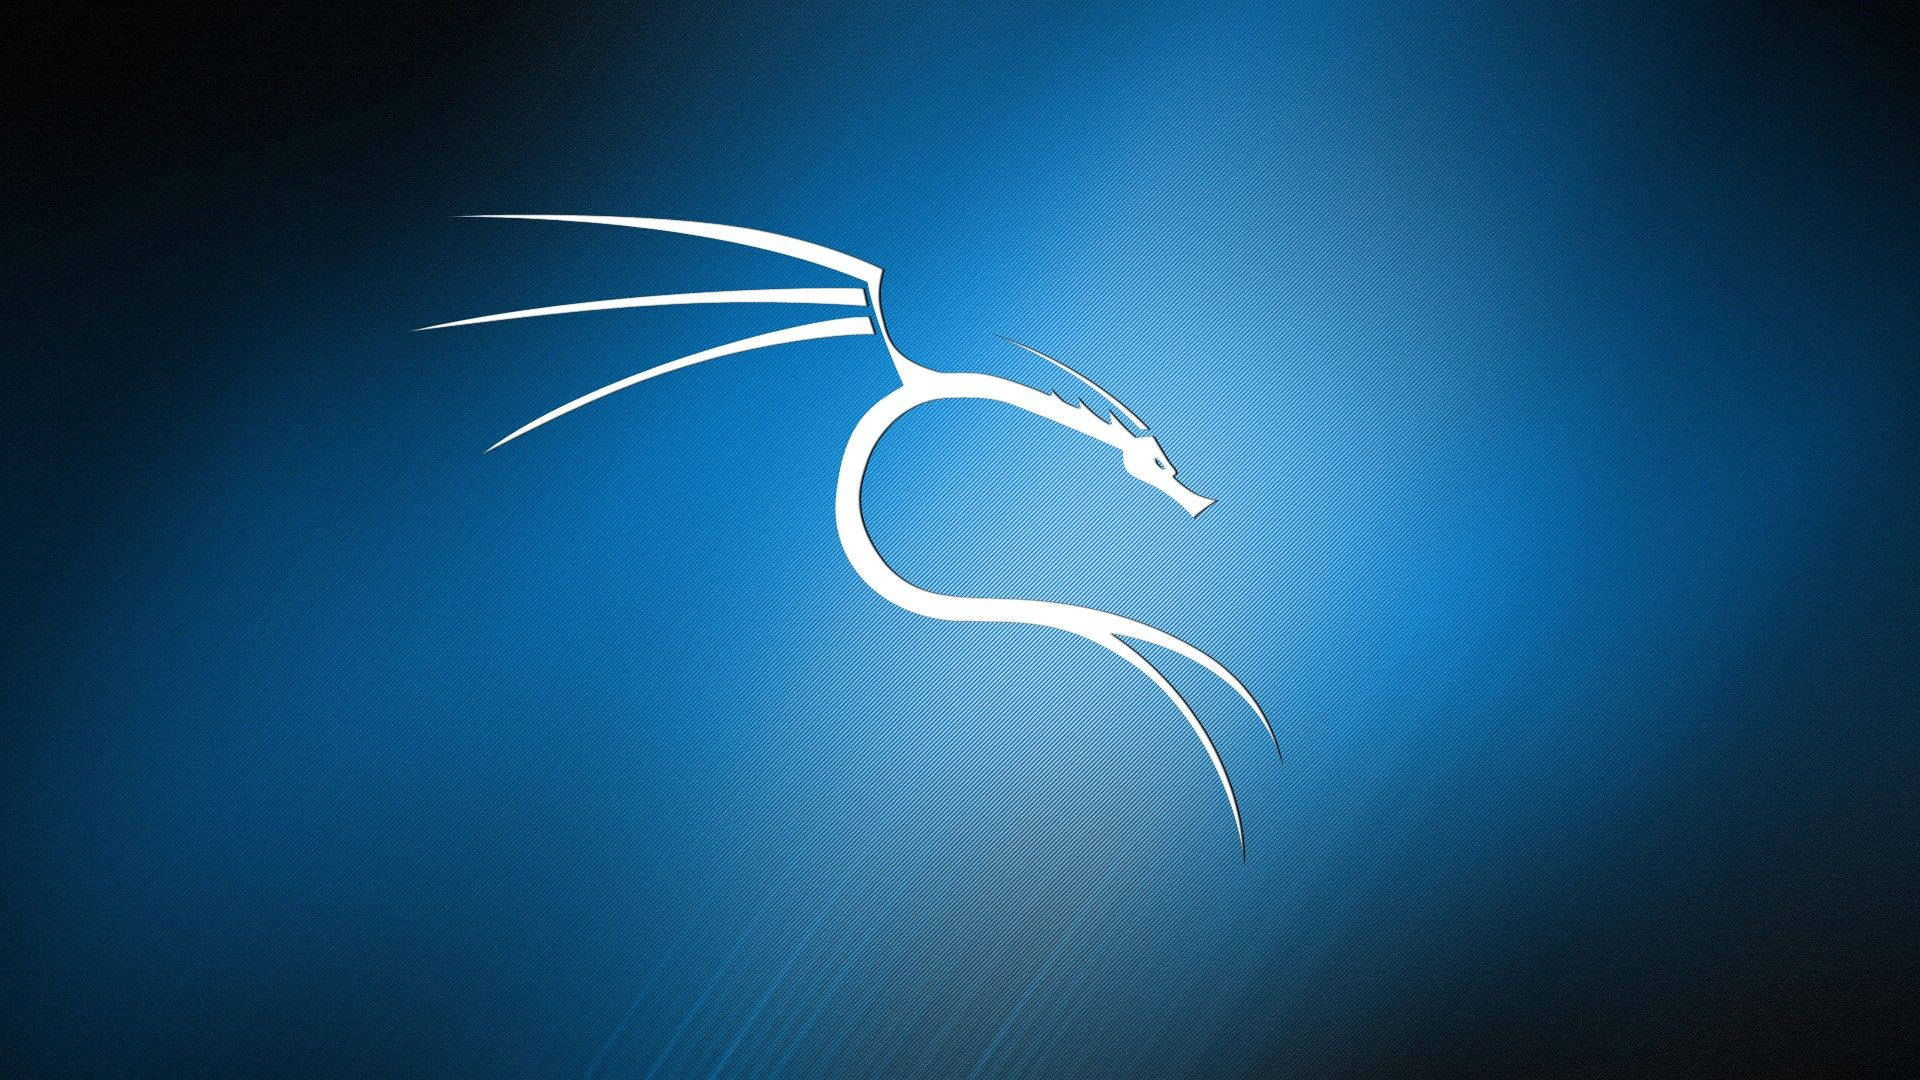 Kali Linux In Gradient Blue Background